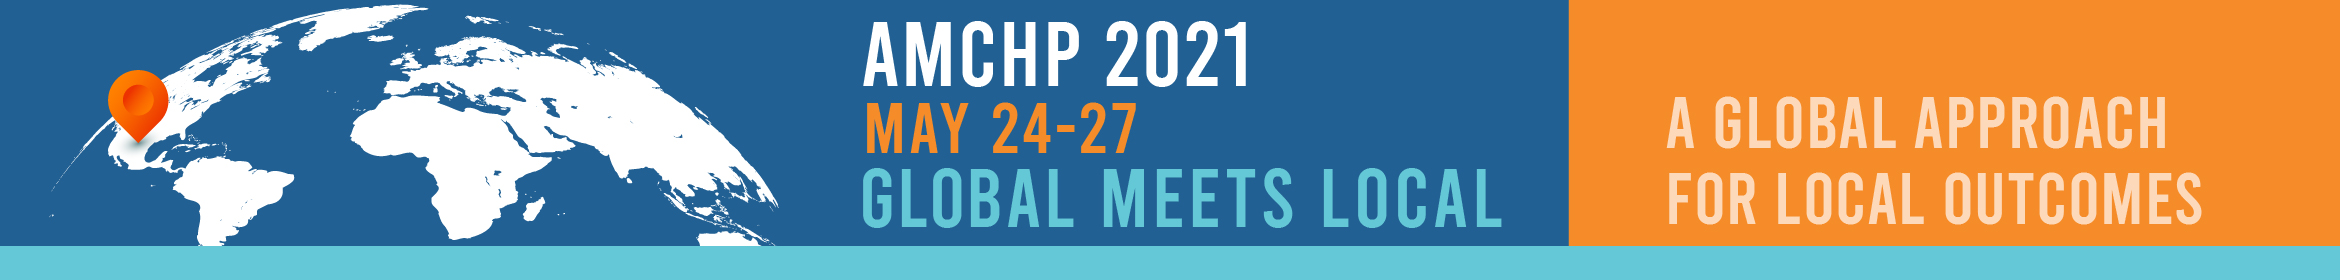 AMCHP 2021 Main banner